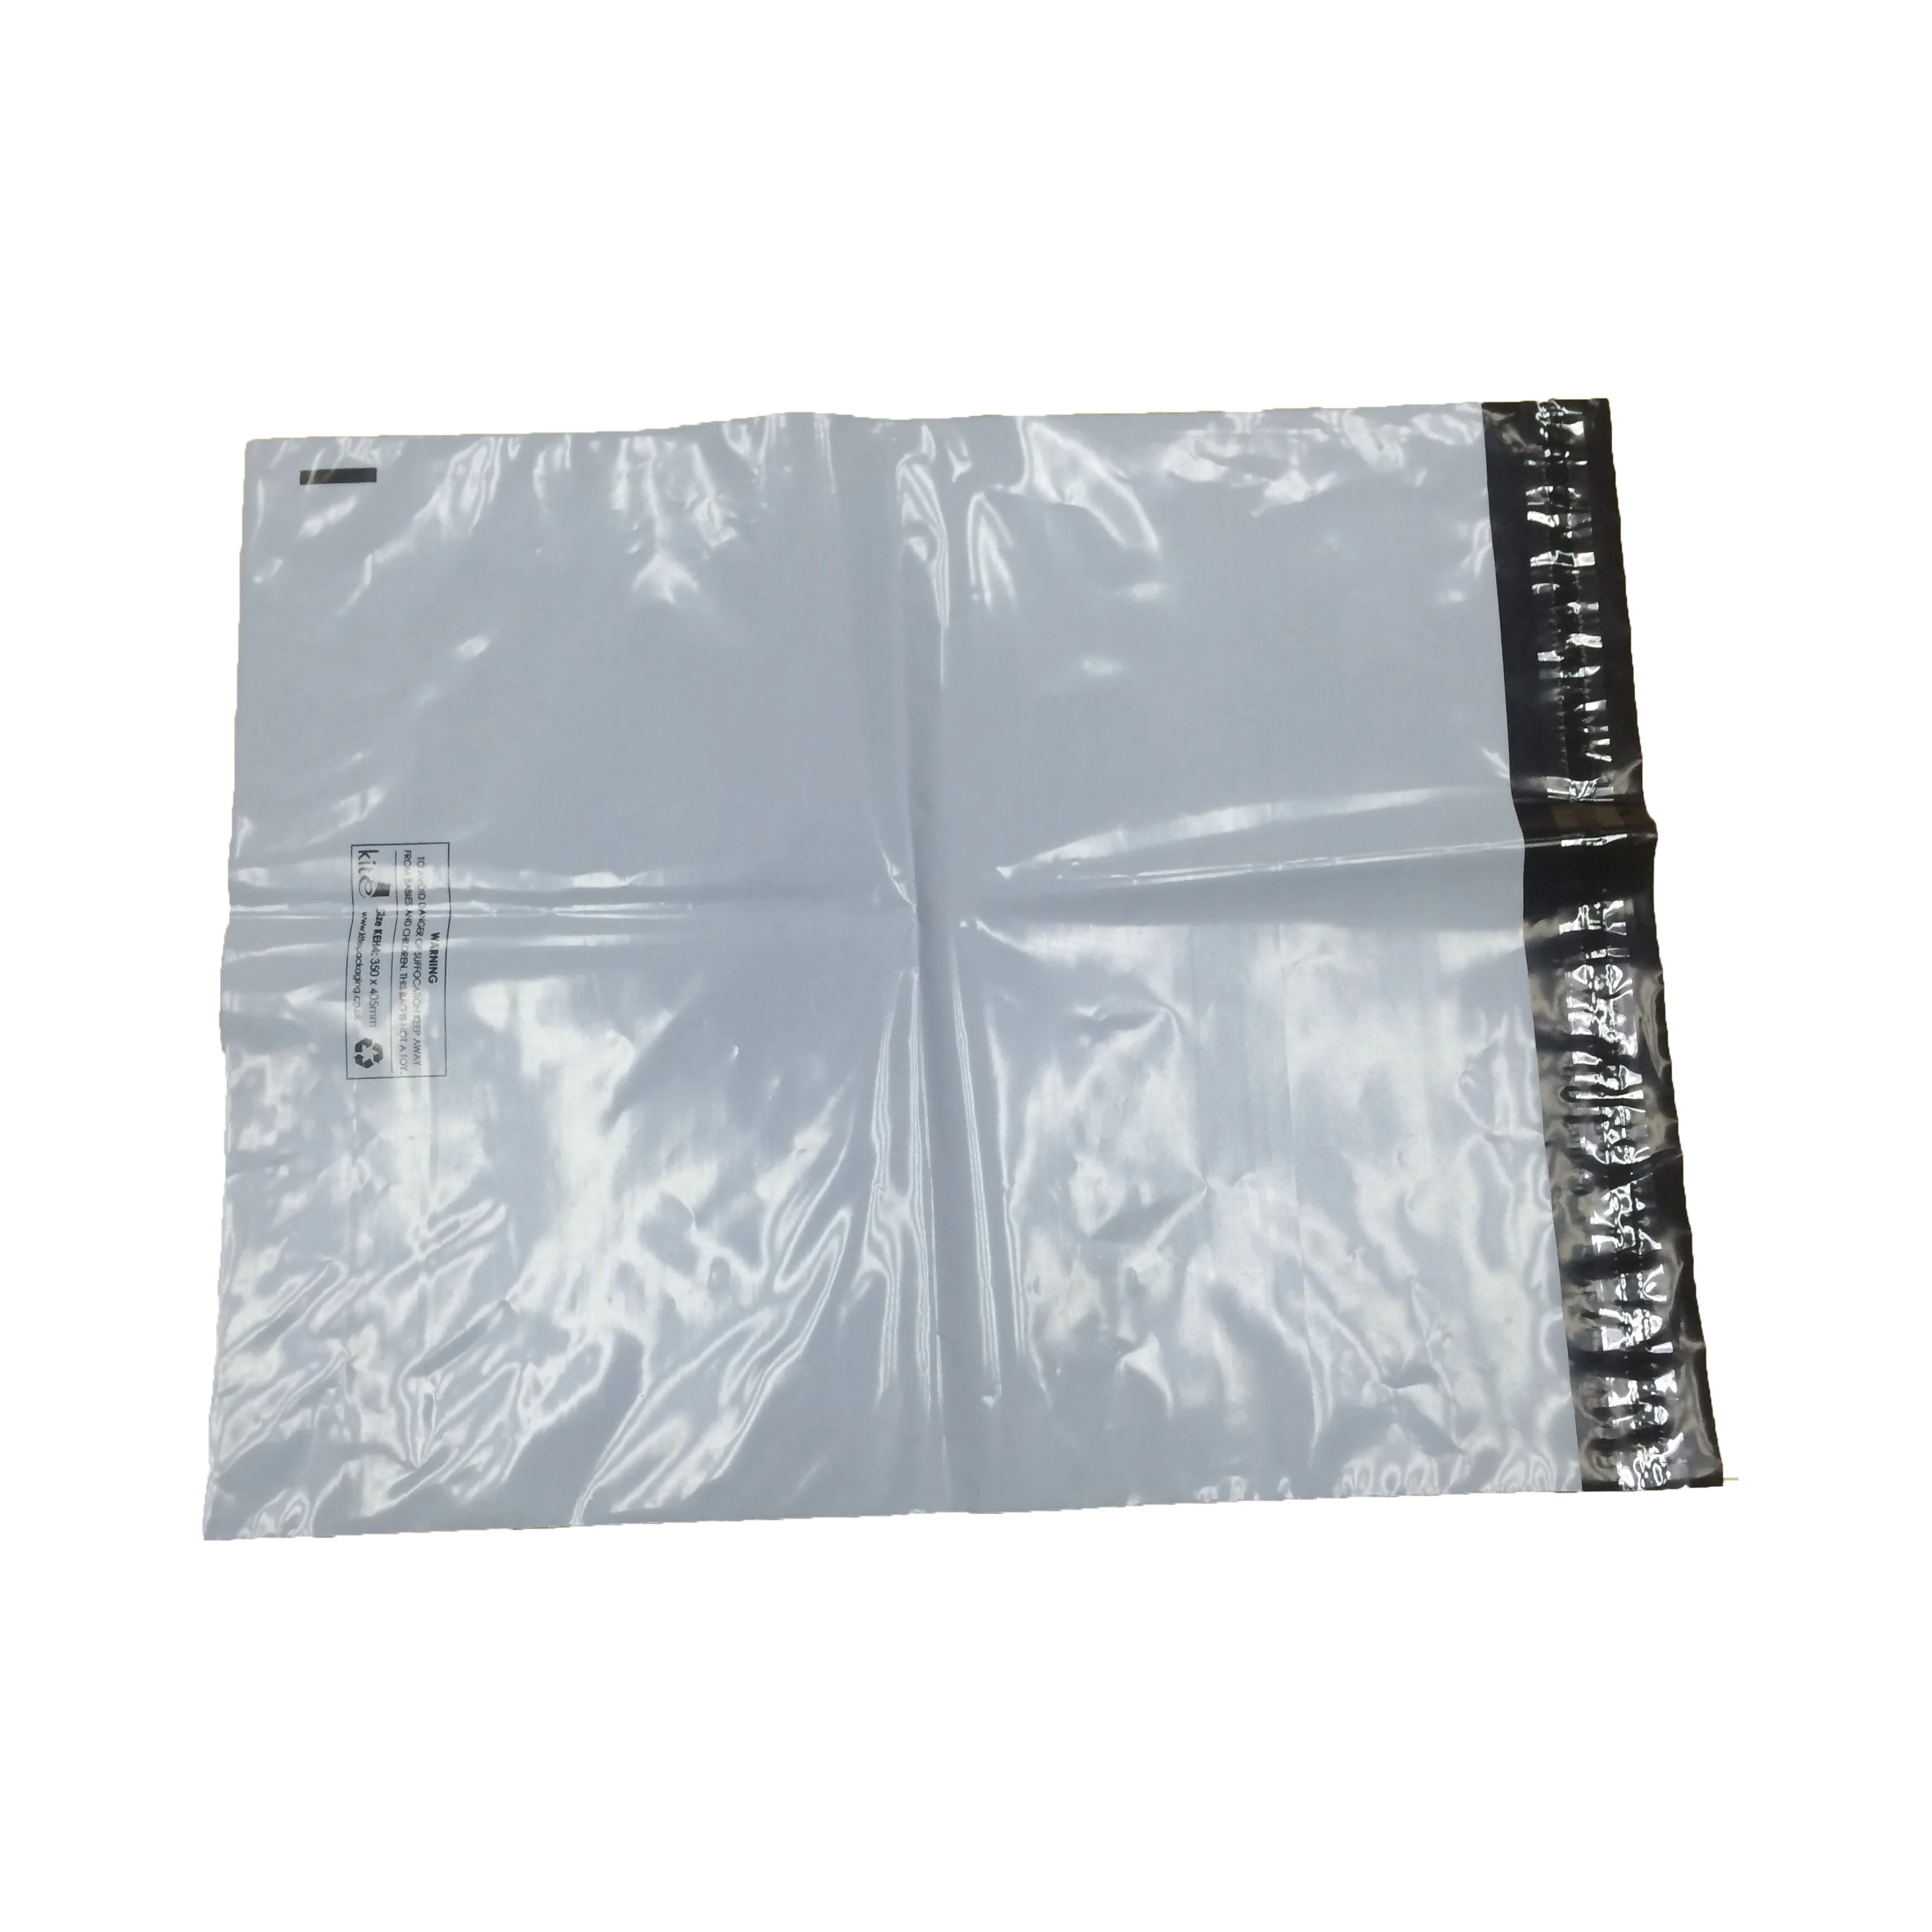 Dhl Express Shipping Envelope Bag / Plastic Grey Mailing Bag - Buy ...